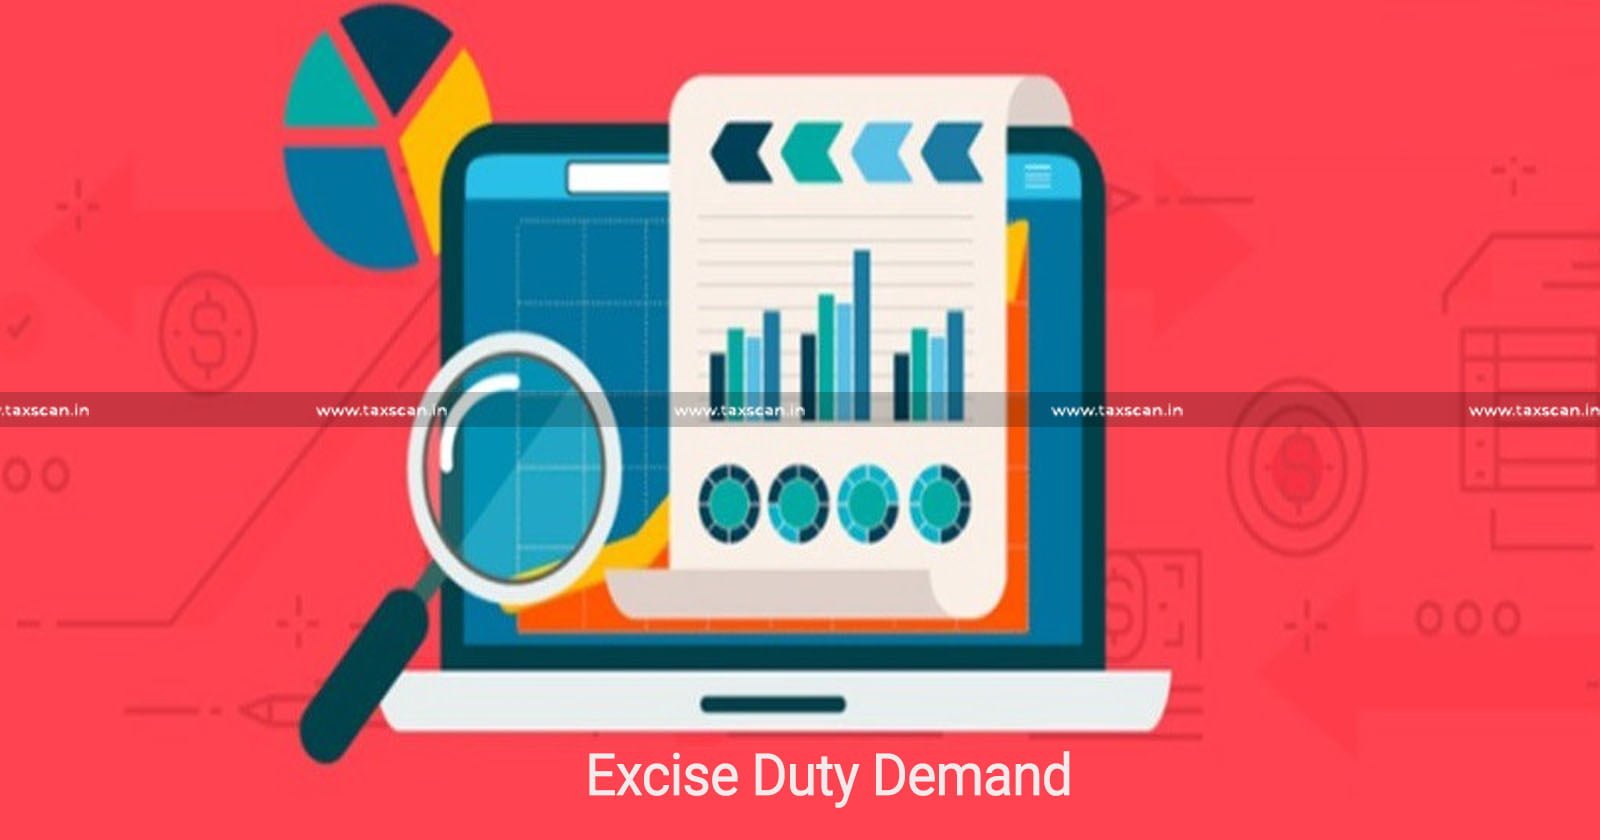 Relief - Haryana Steet Glass ltd - CESTAT - Re-adjudication - Computation of Excise duty - Excise duty - DTA - Document Analysis - taxscan